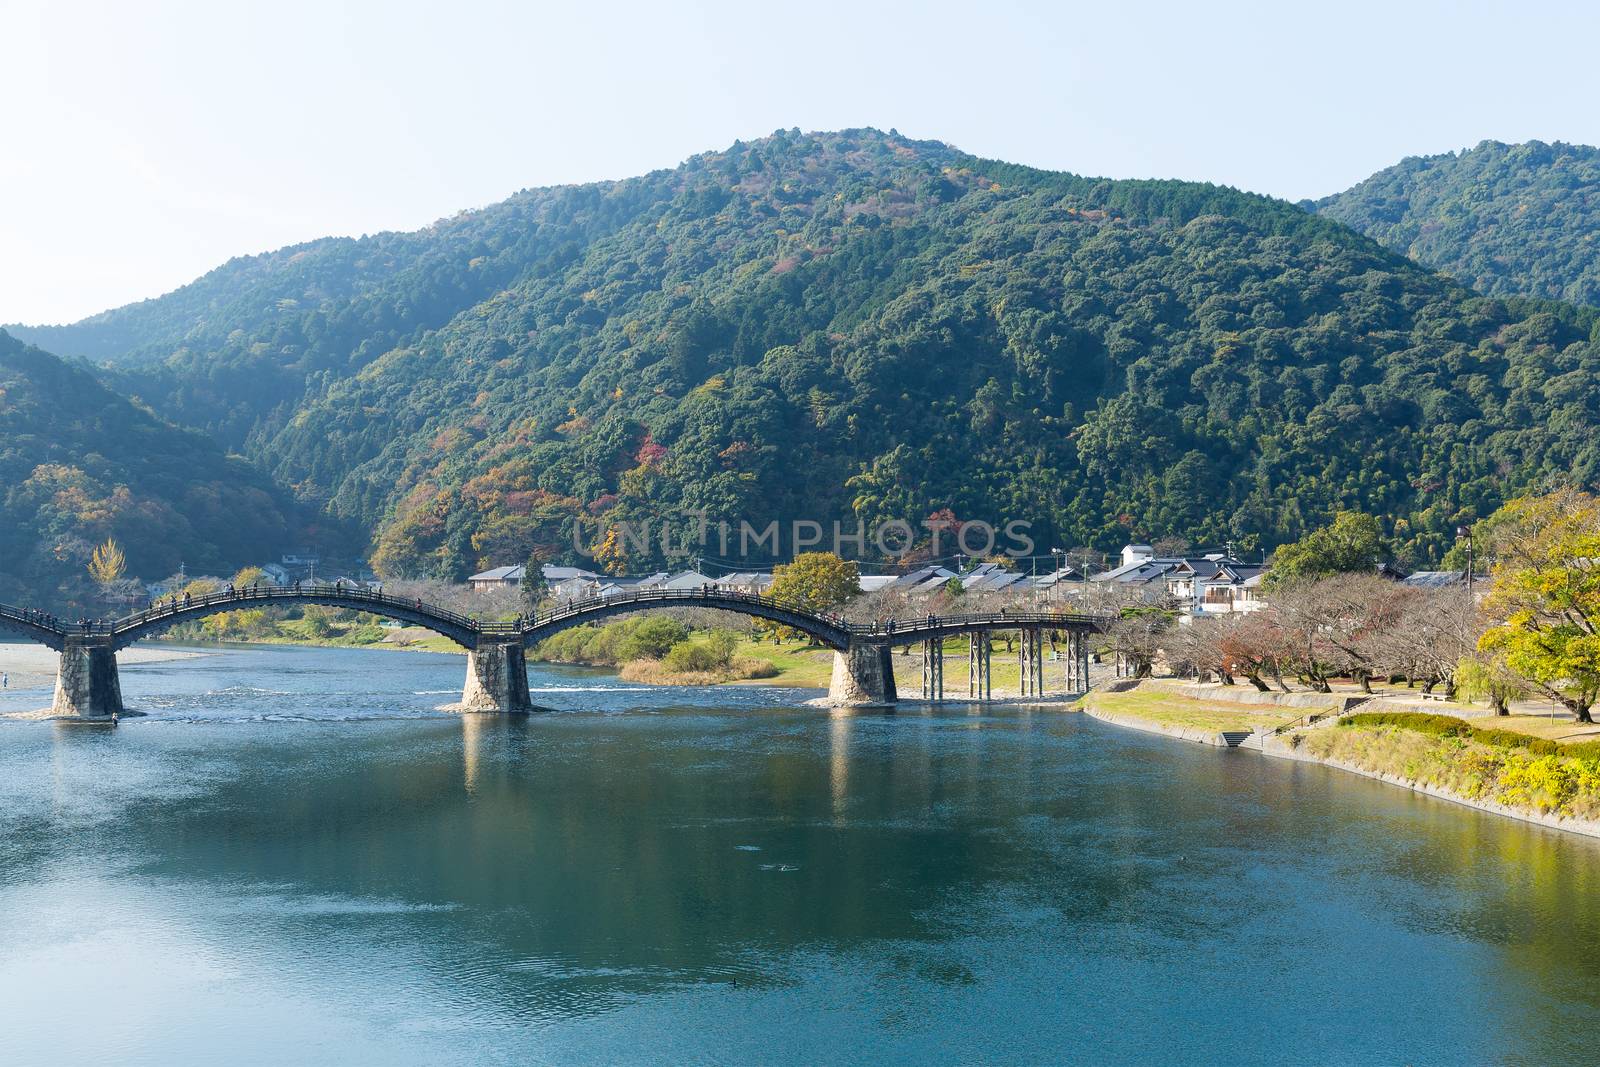 Kintai Bridge in Japan